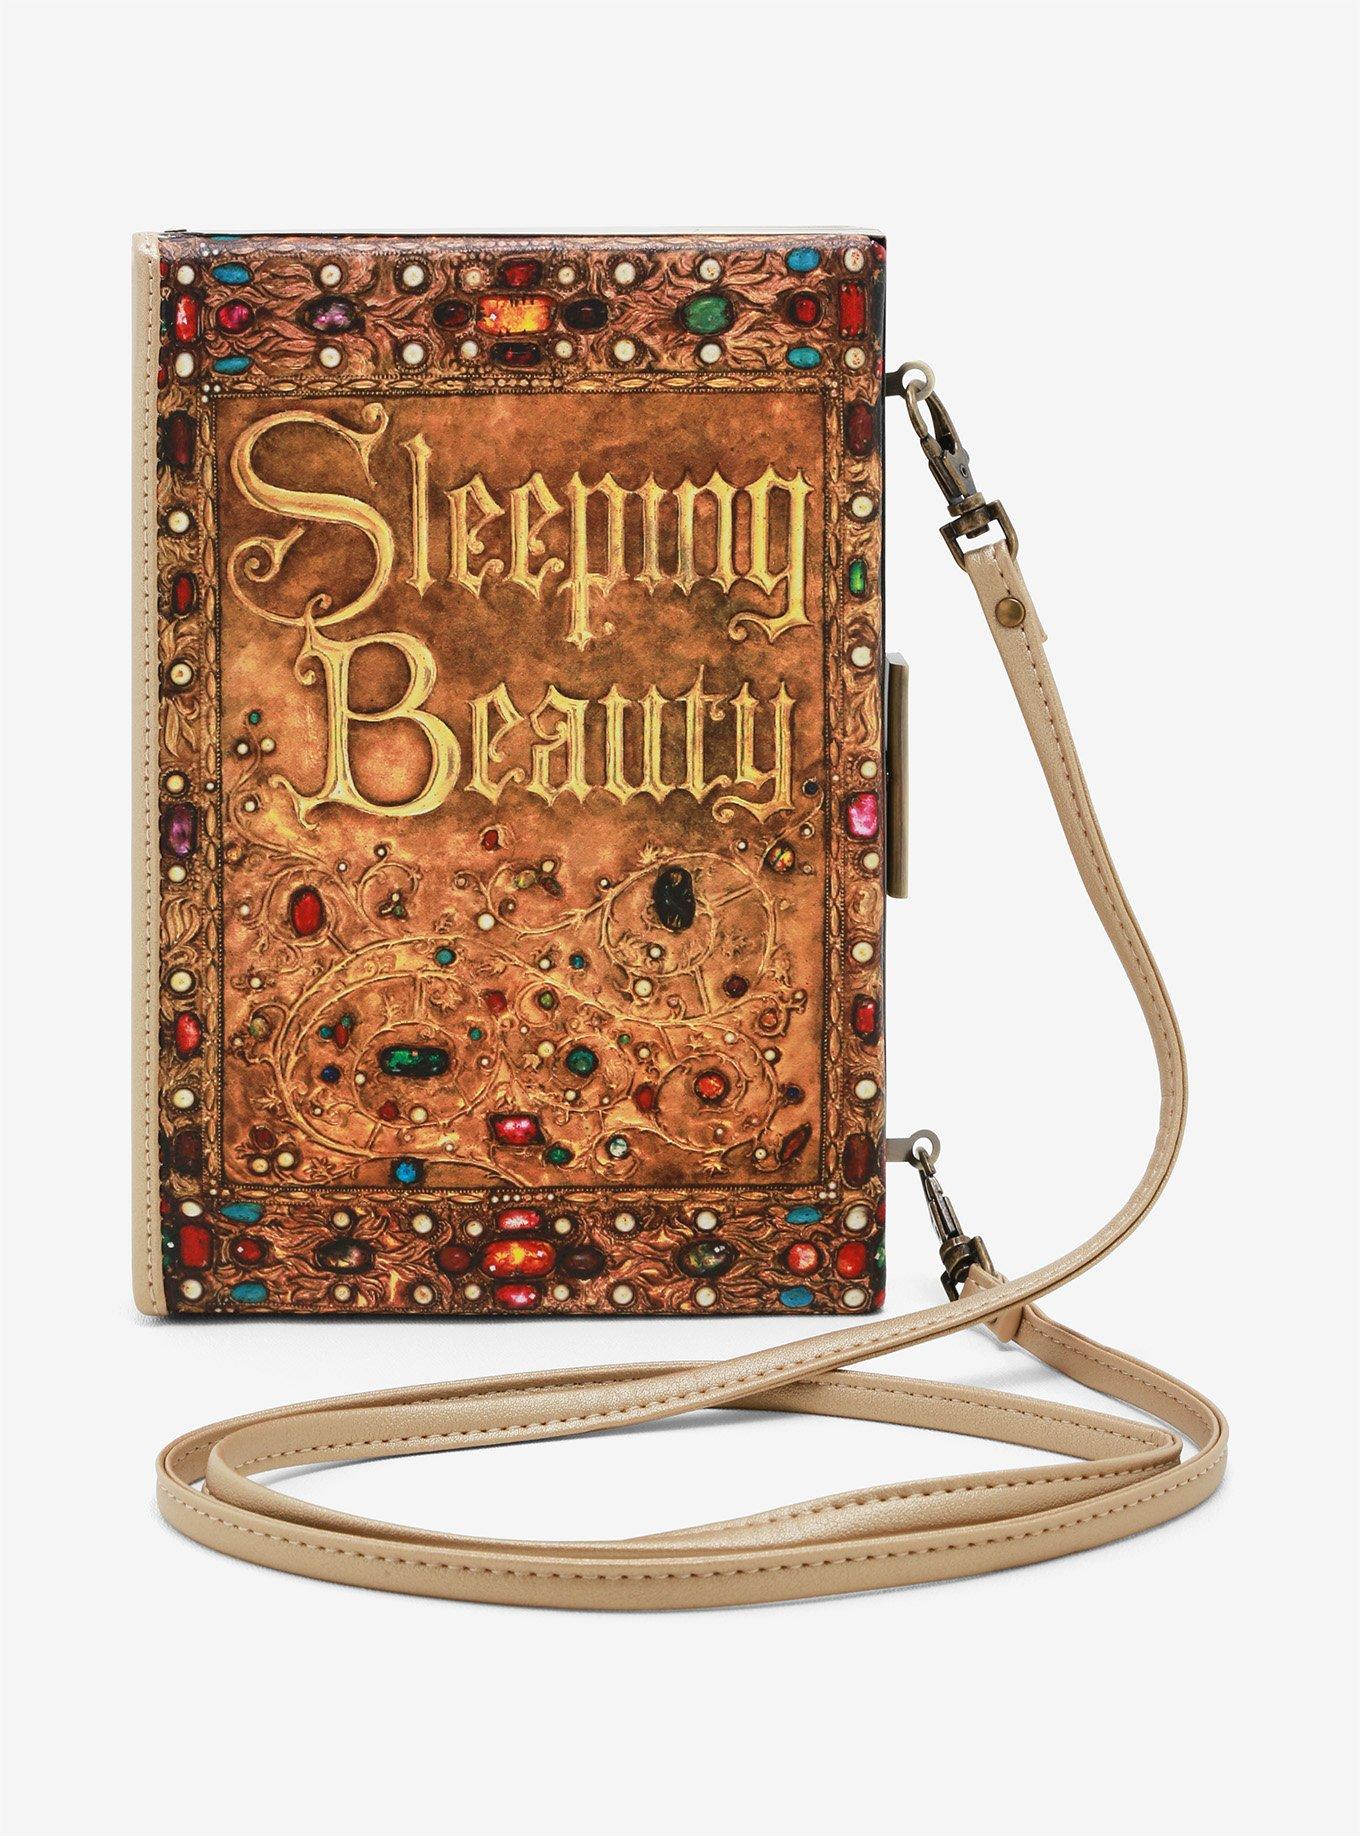 Sleeping Beauty Bag 